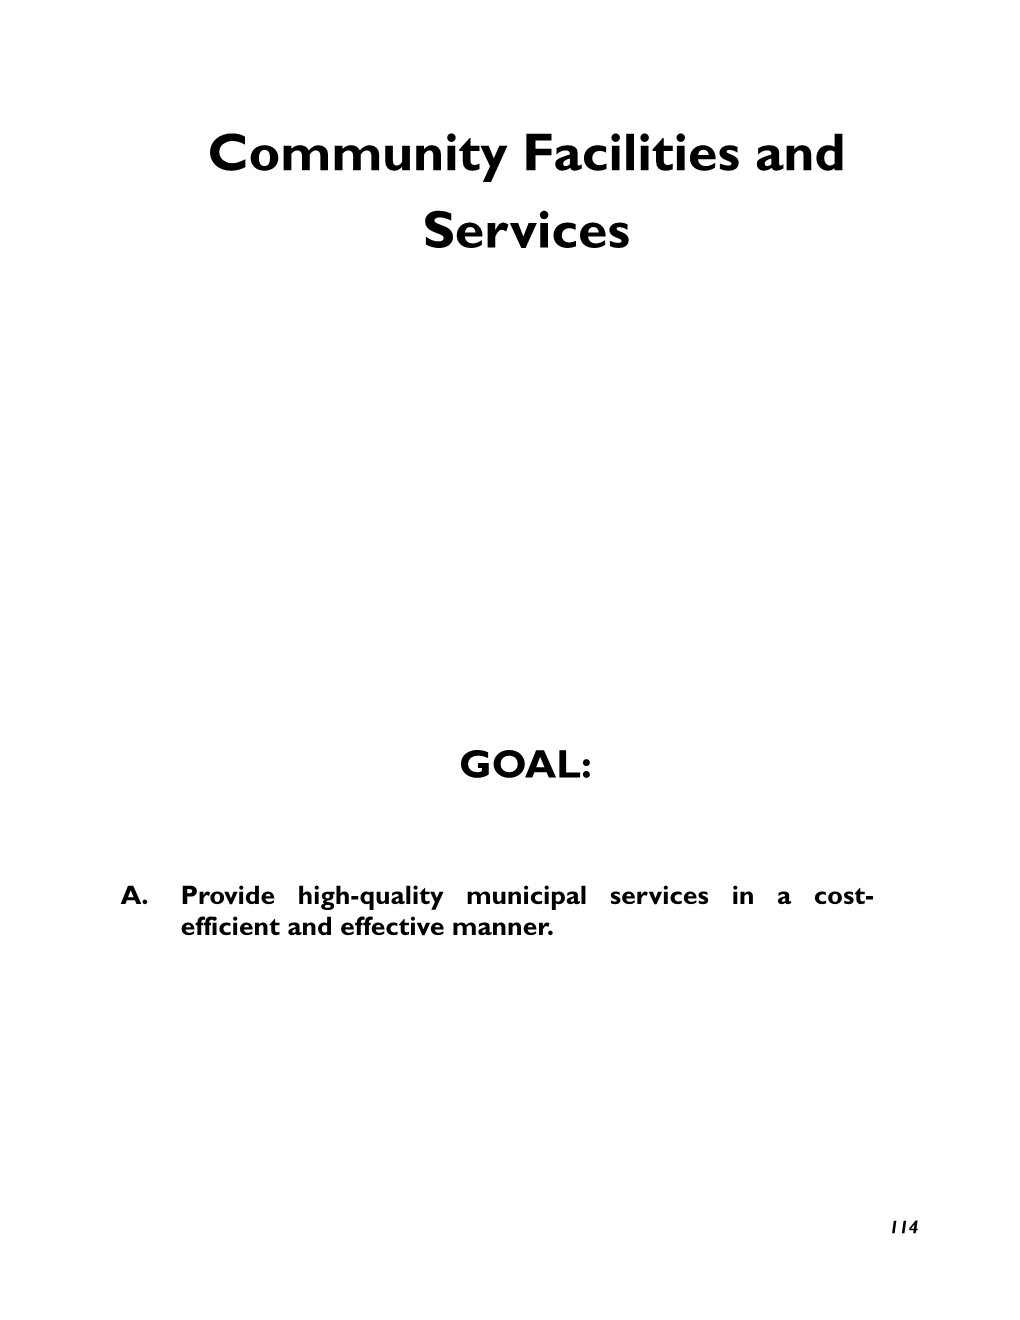 Community Facilities & Services